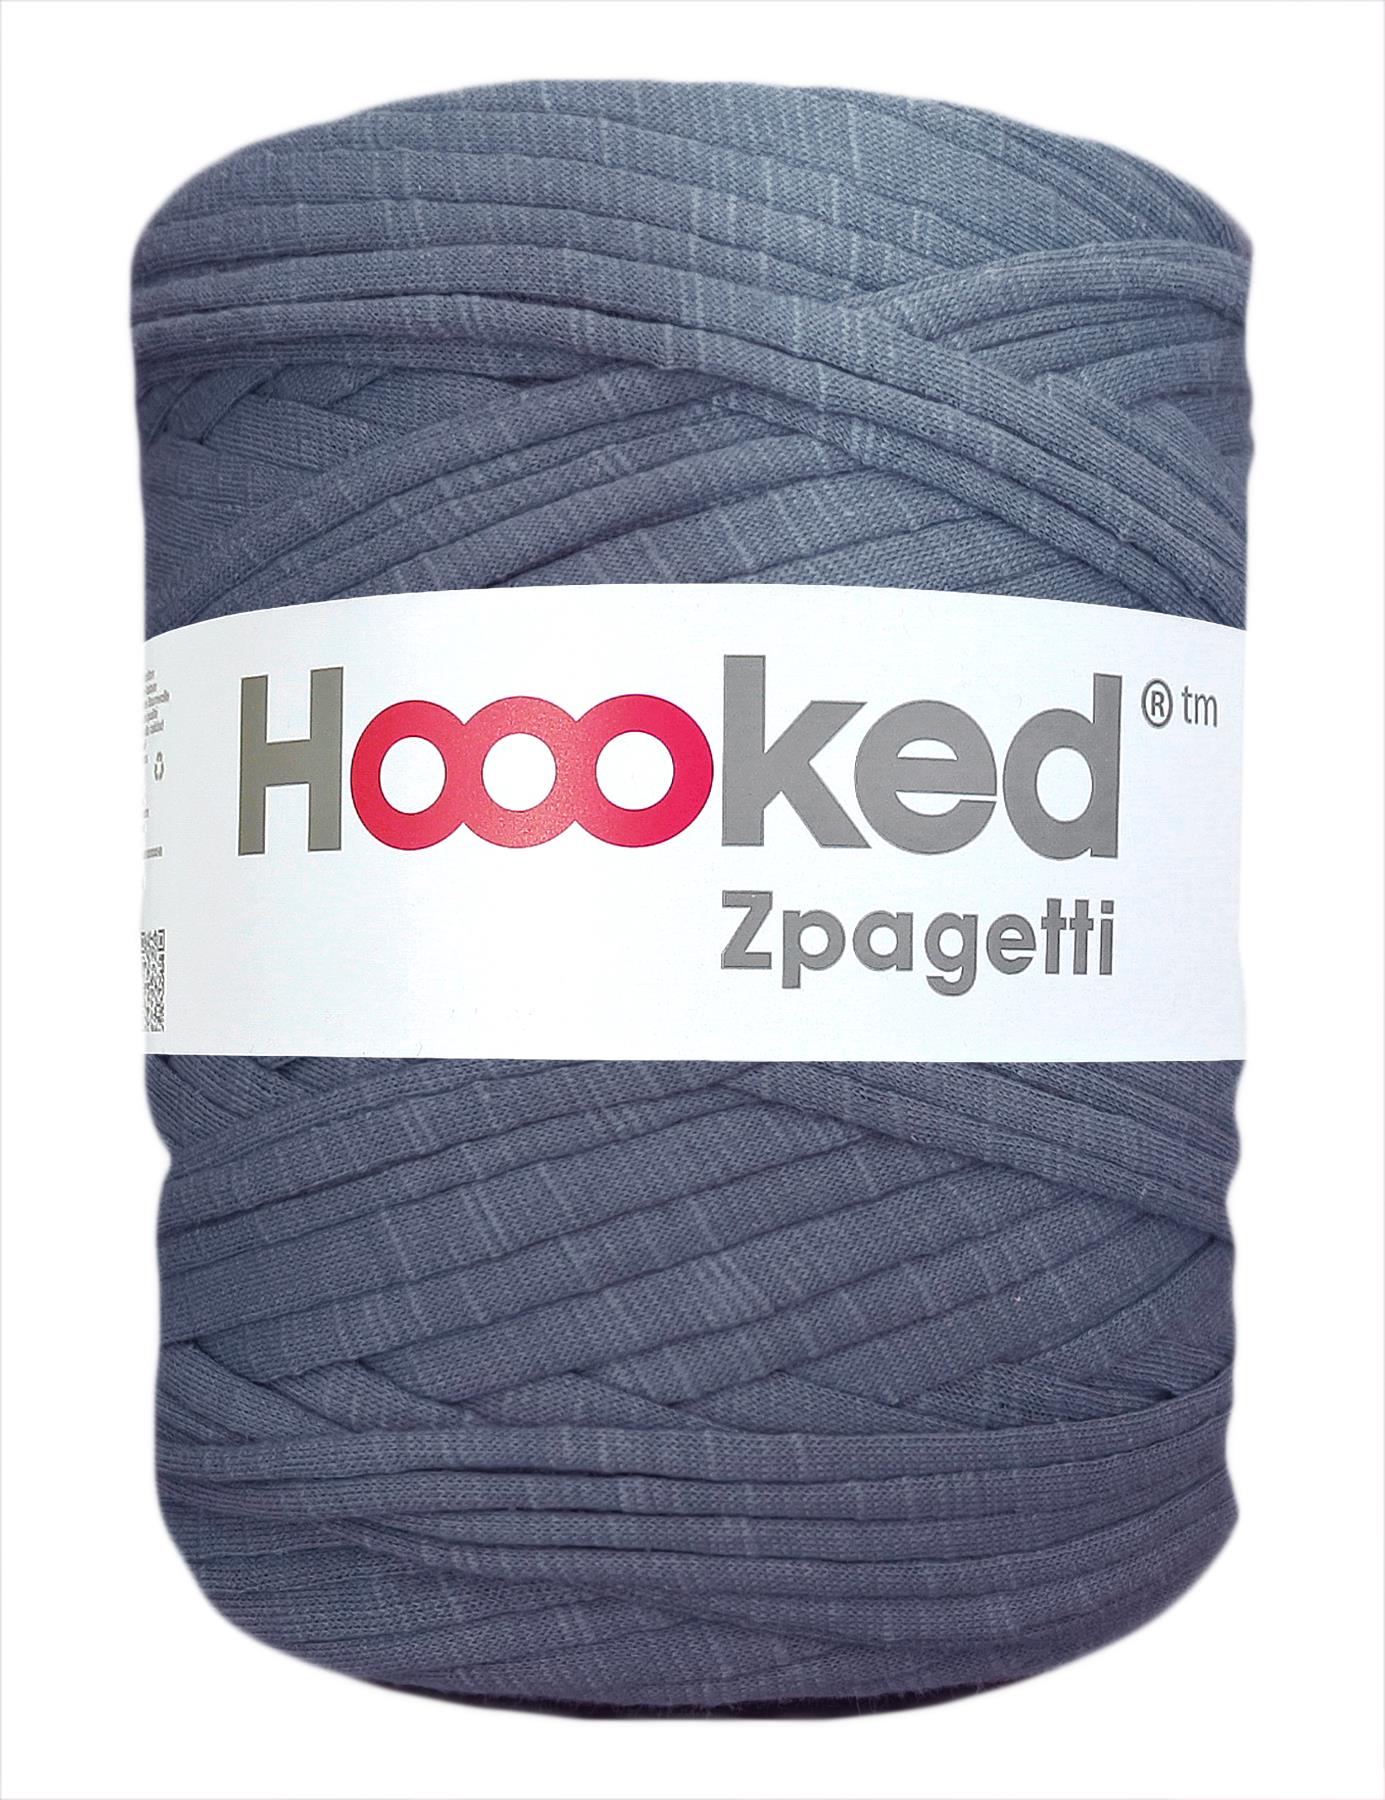 Stippled pale slate blue t-shirt yarn by Hoooked Zpagetti (100-120m)